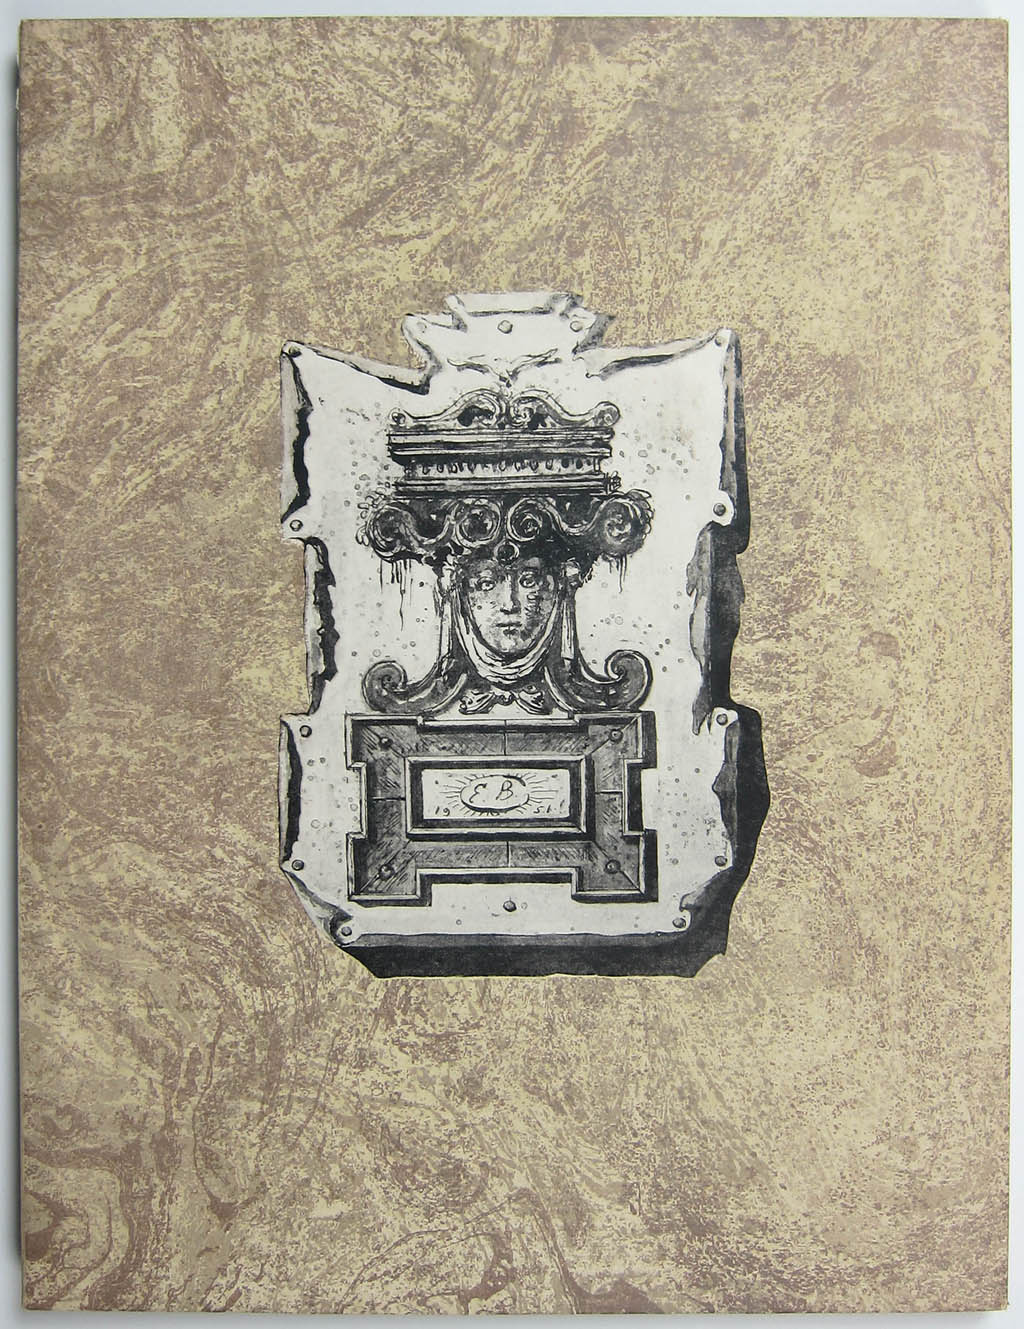 Eugene Berman - Viaggio in Italia - wraps (verso) - 1951 portfolio of lithographs and text